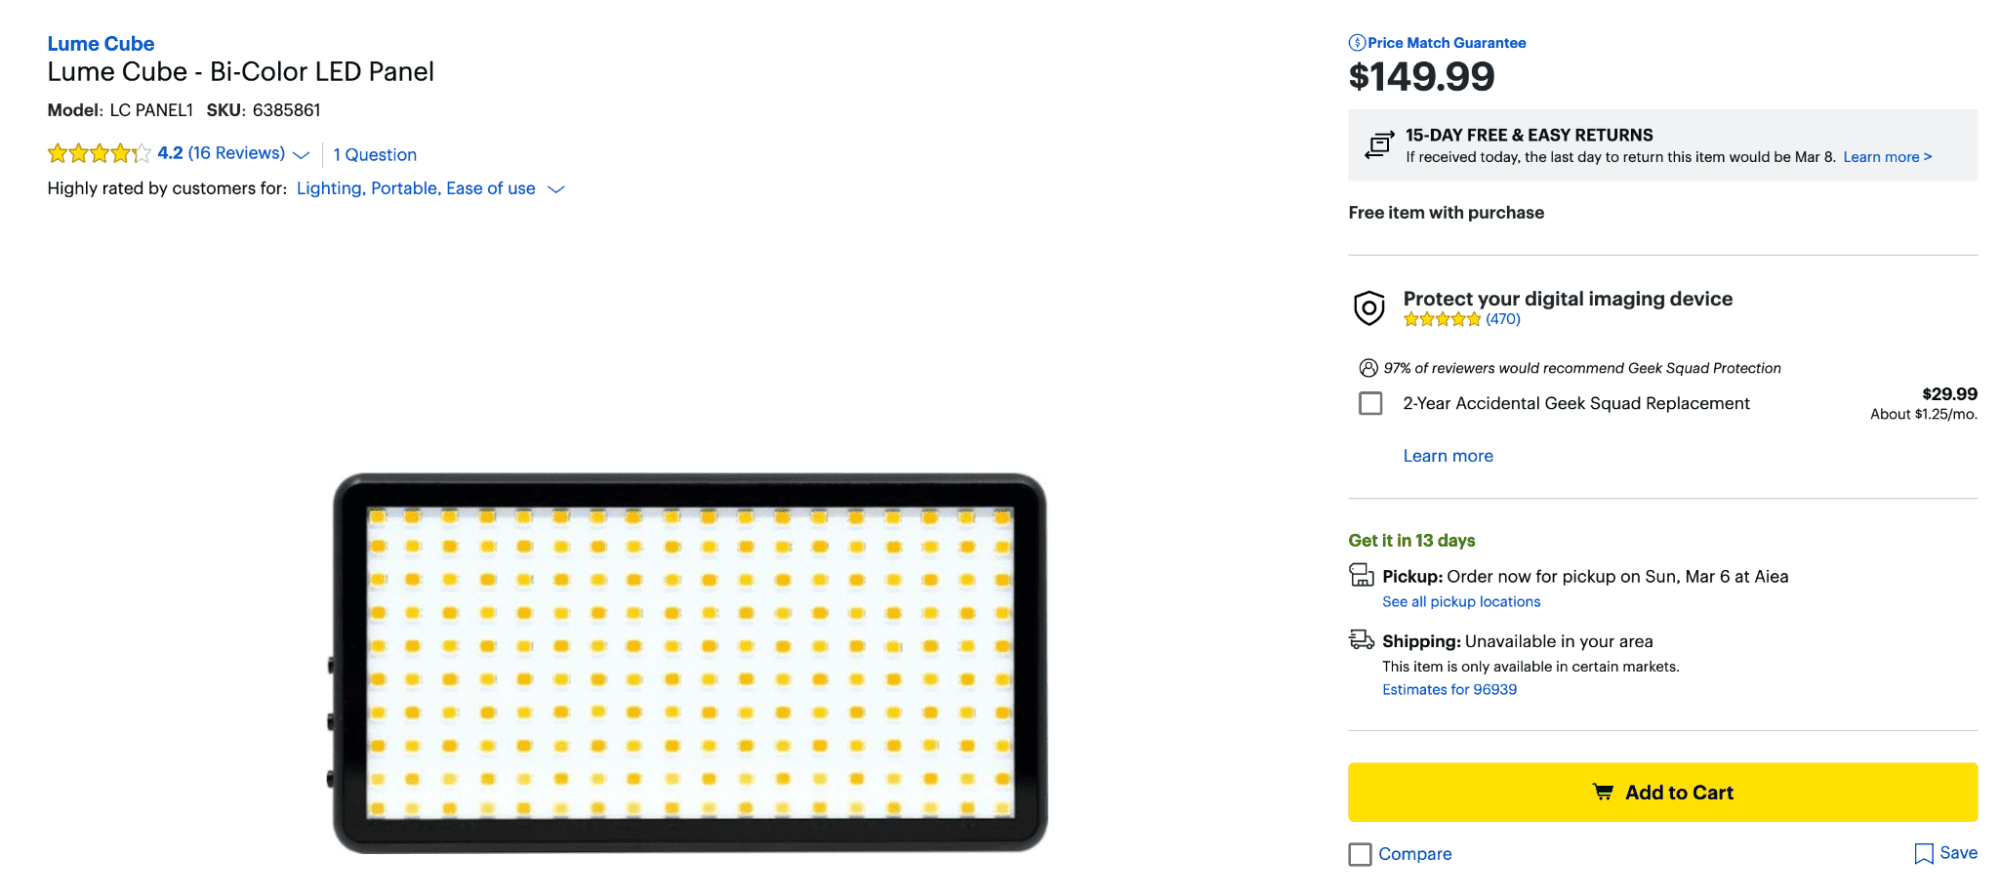 Lume Cube - Bi-Color LED Panel